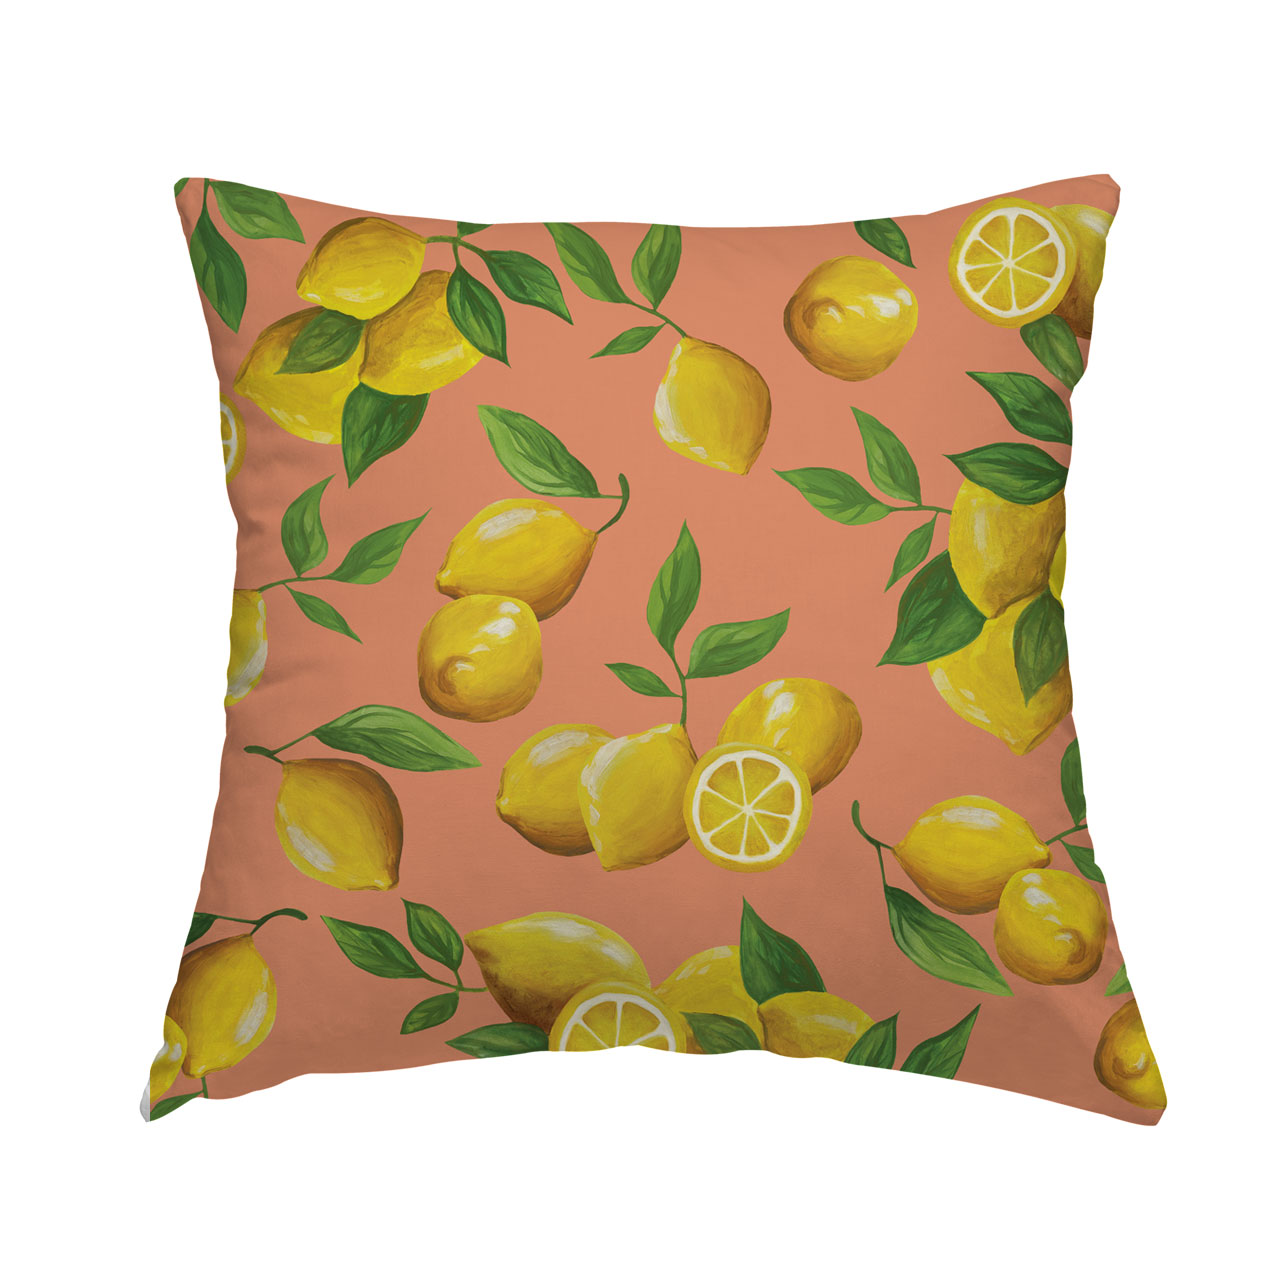 Lemons-Leaves-Apricot-Orange-Fruits-Citrus-Pillow